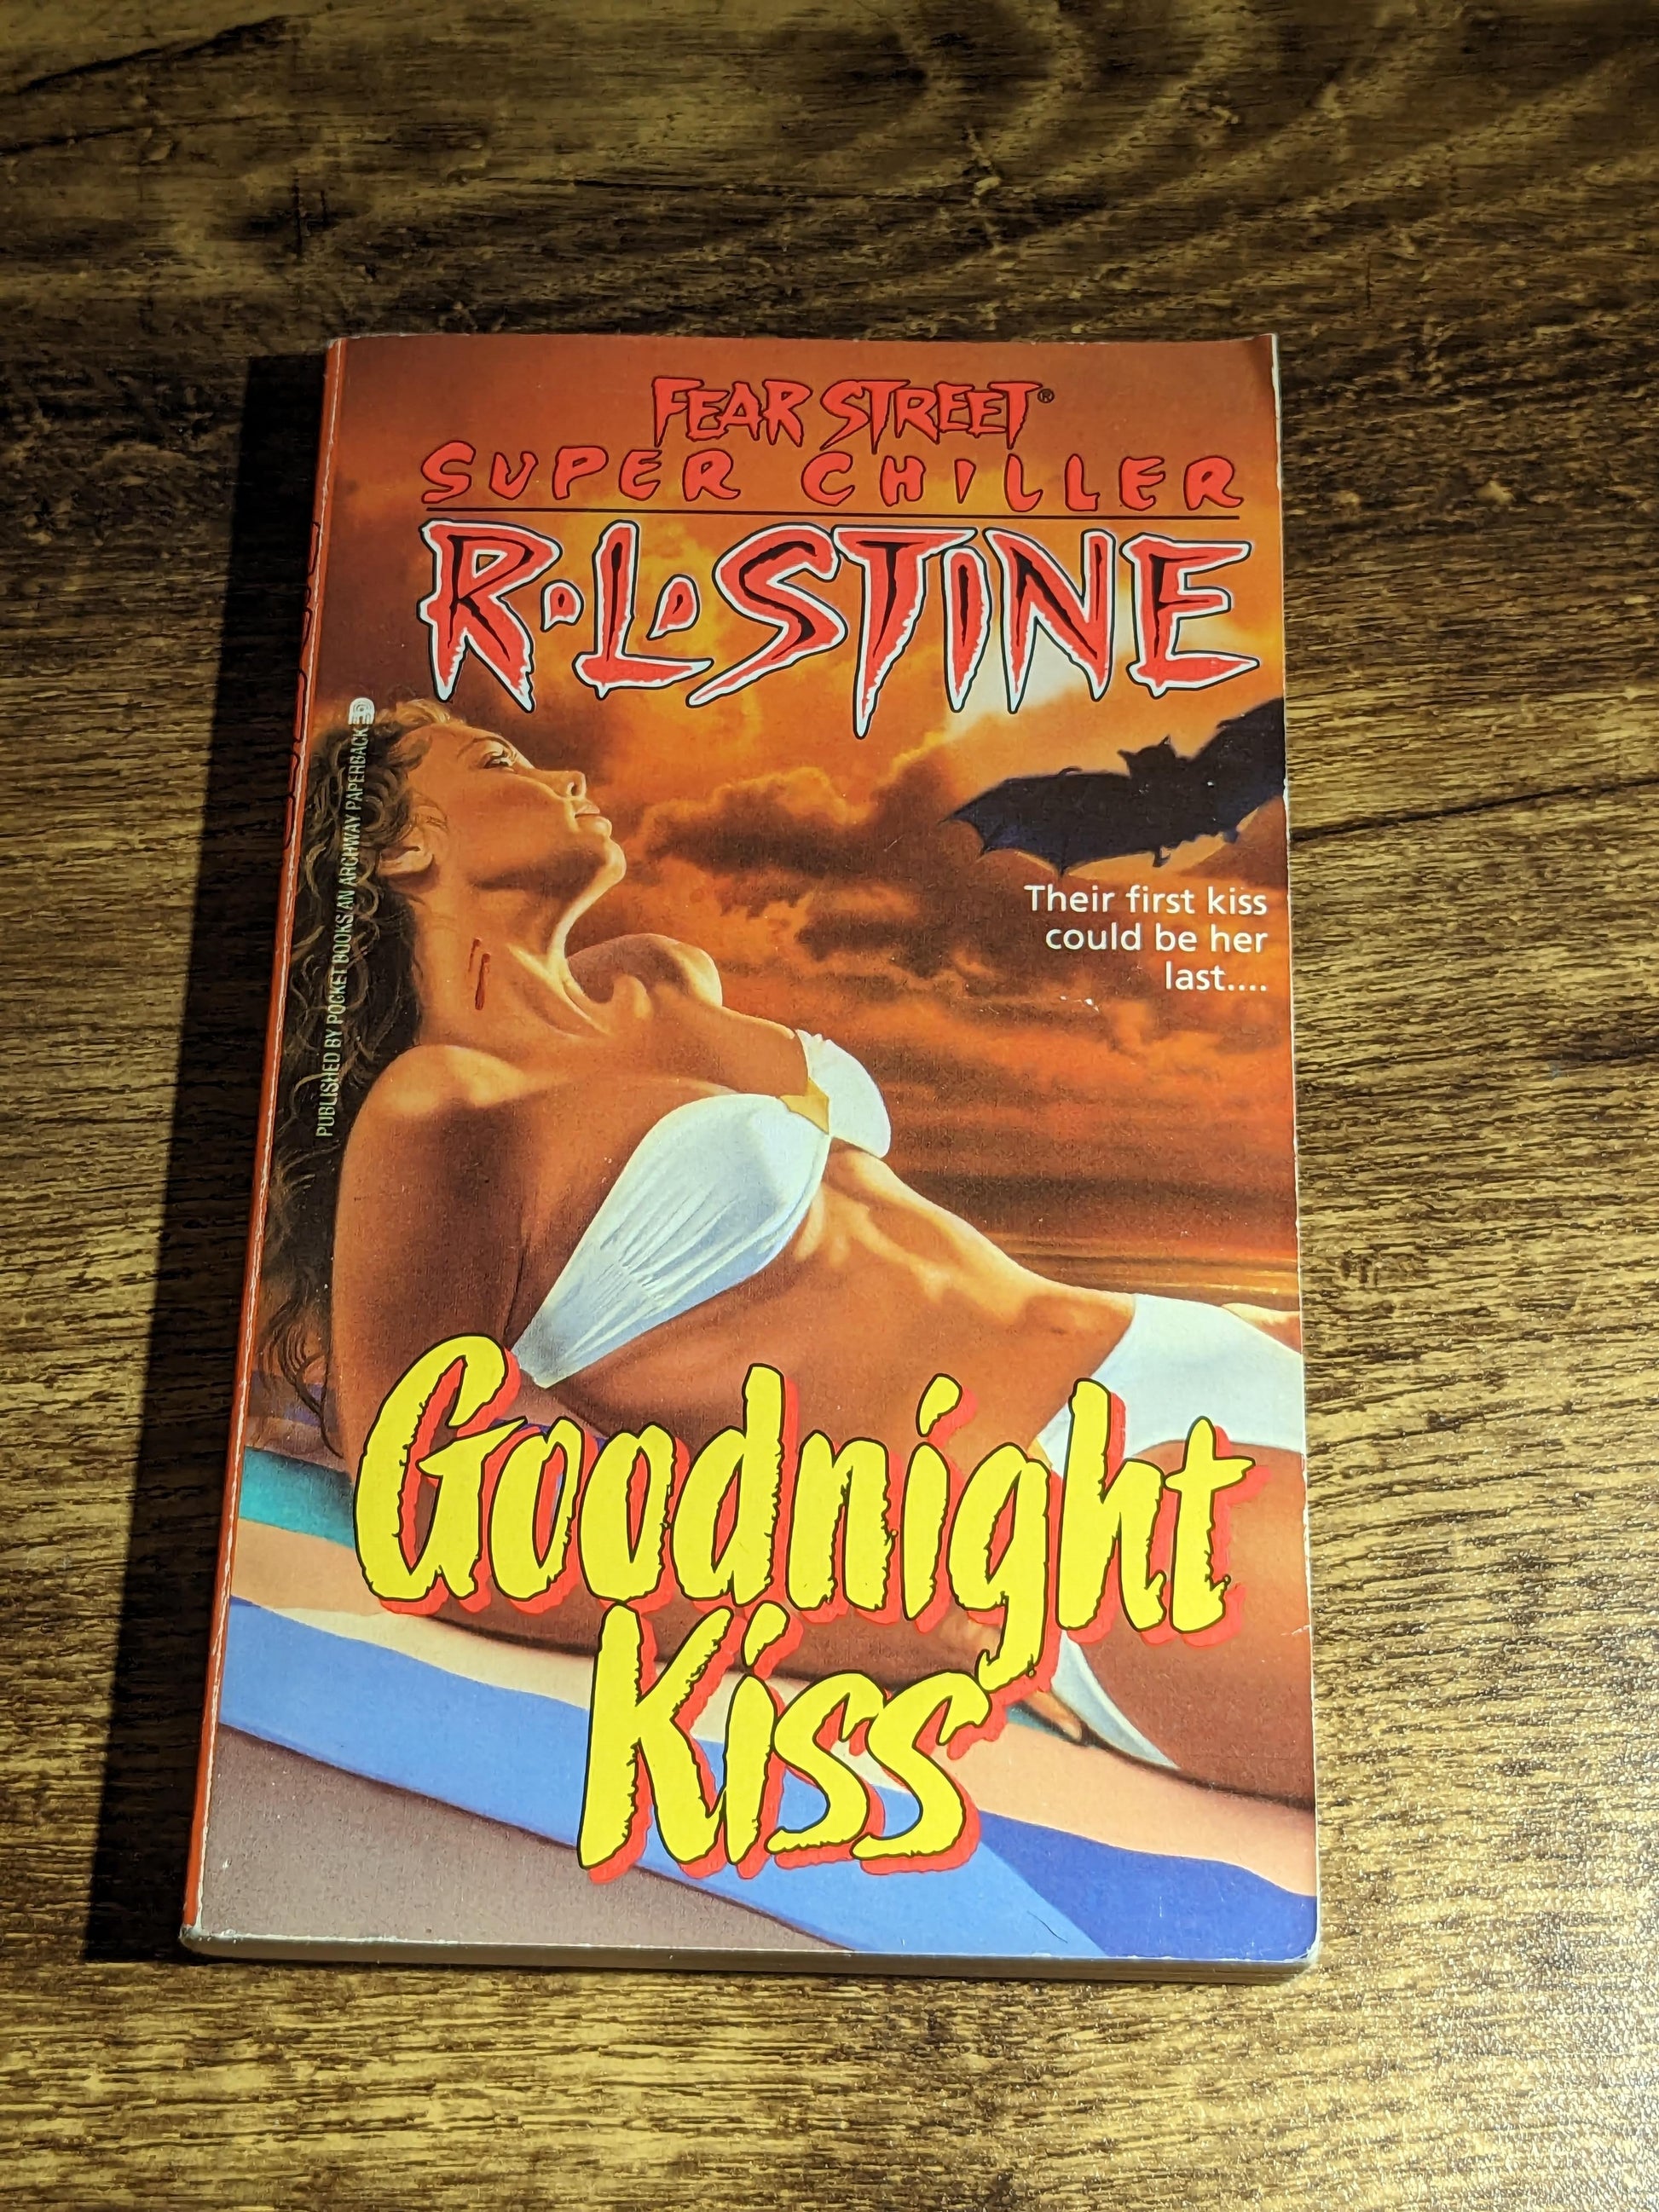 GOODNIGHT KISS (Fear Street Super Chiller) by R.L. Stine - Asylum Books